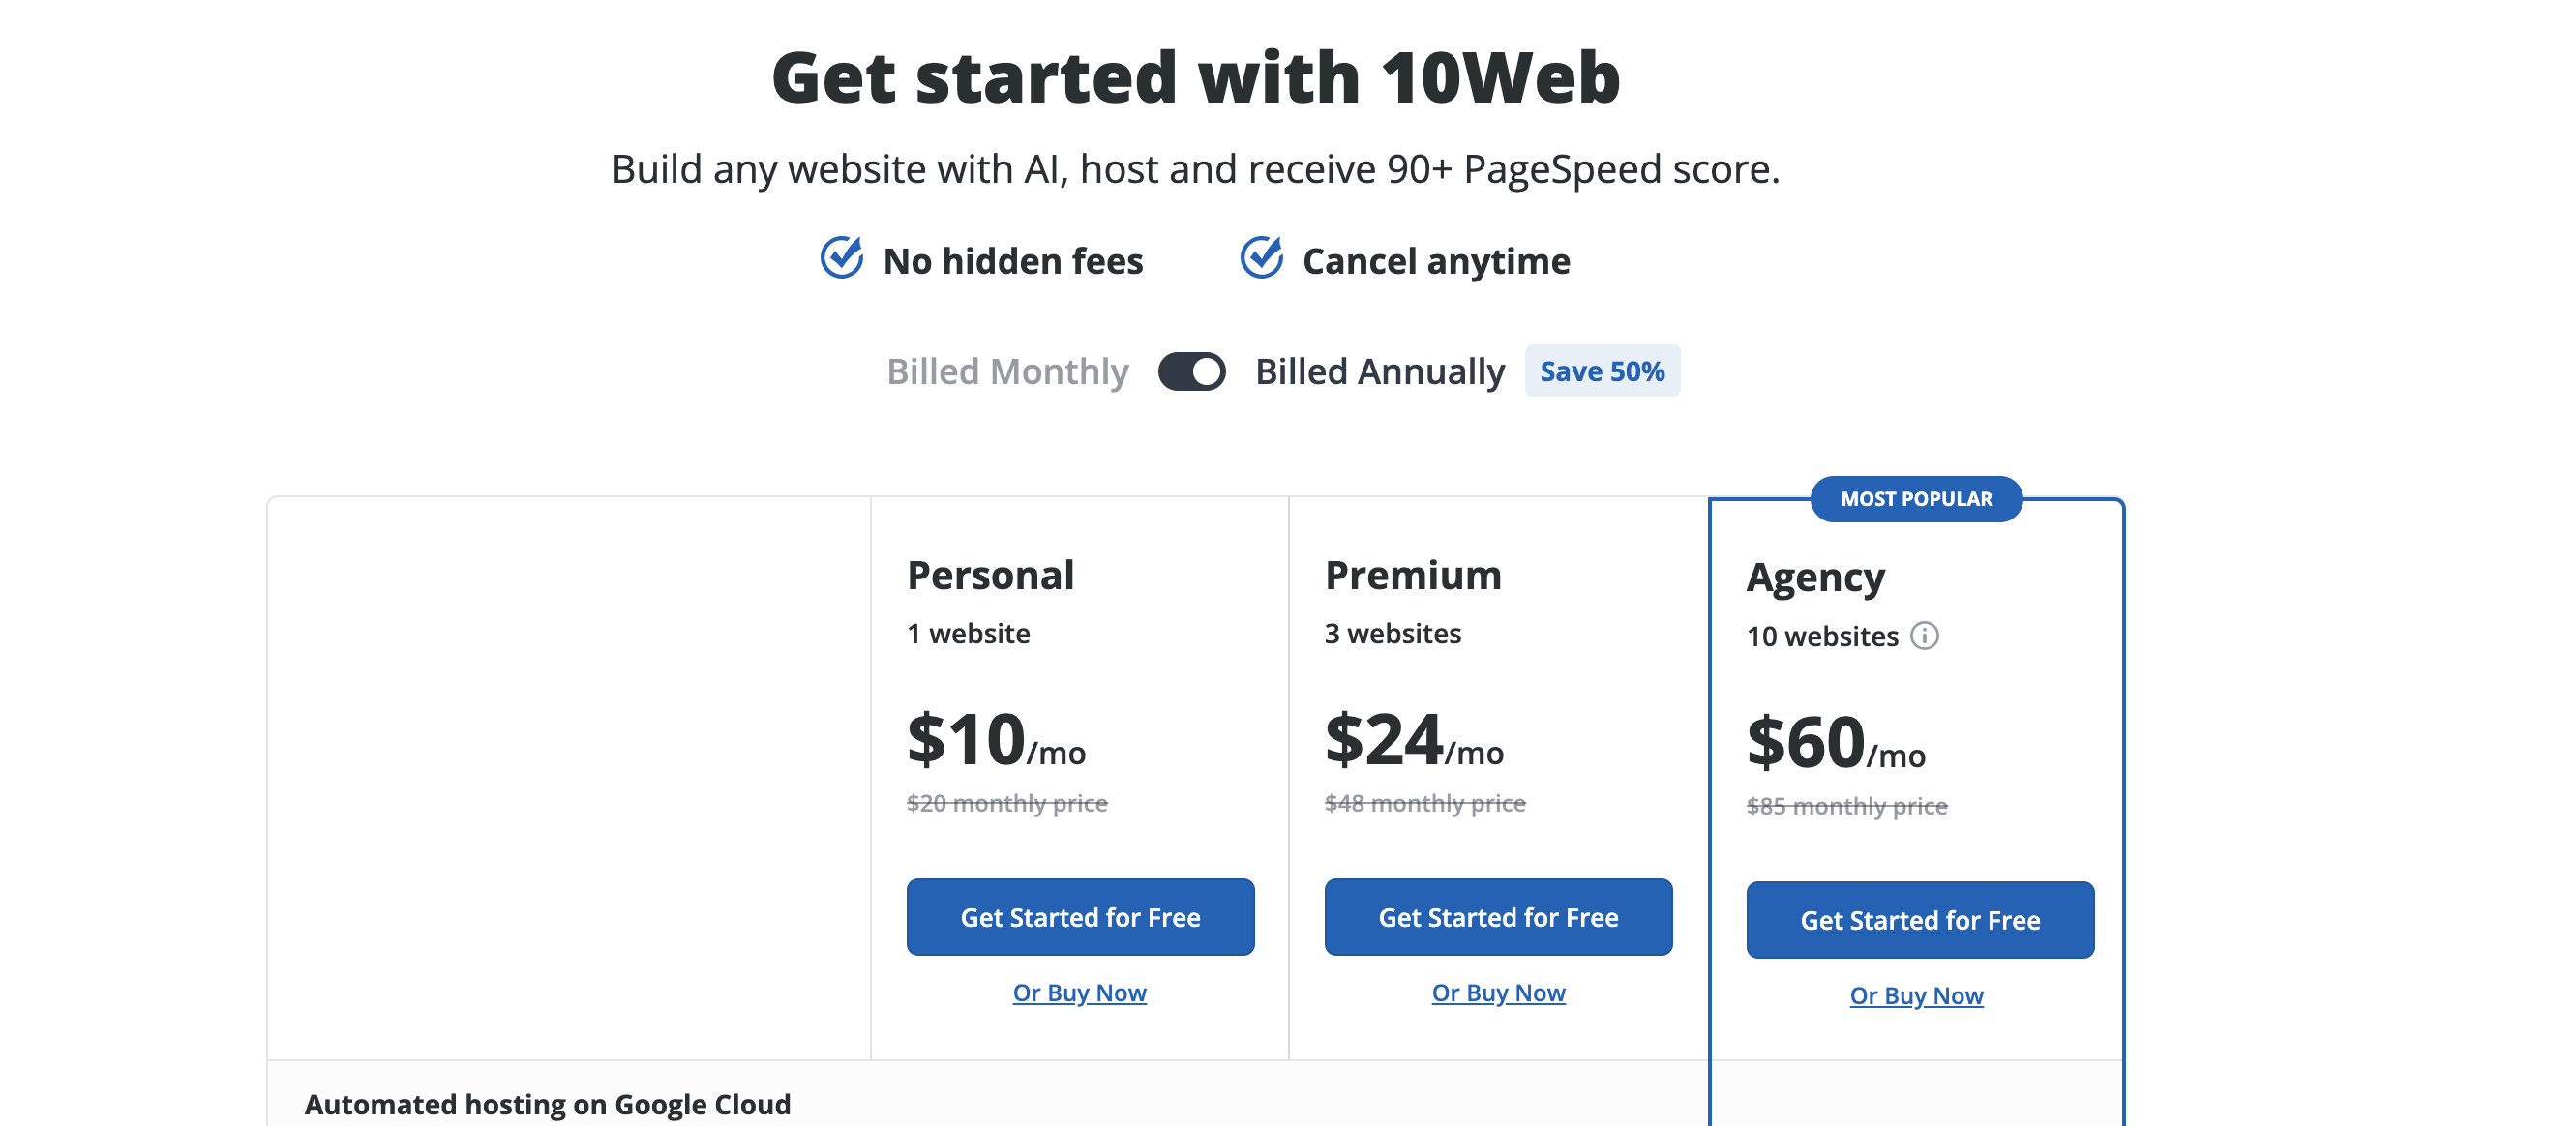 10web pricing plans 